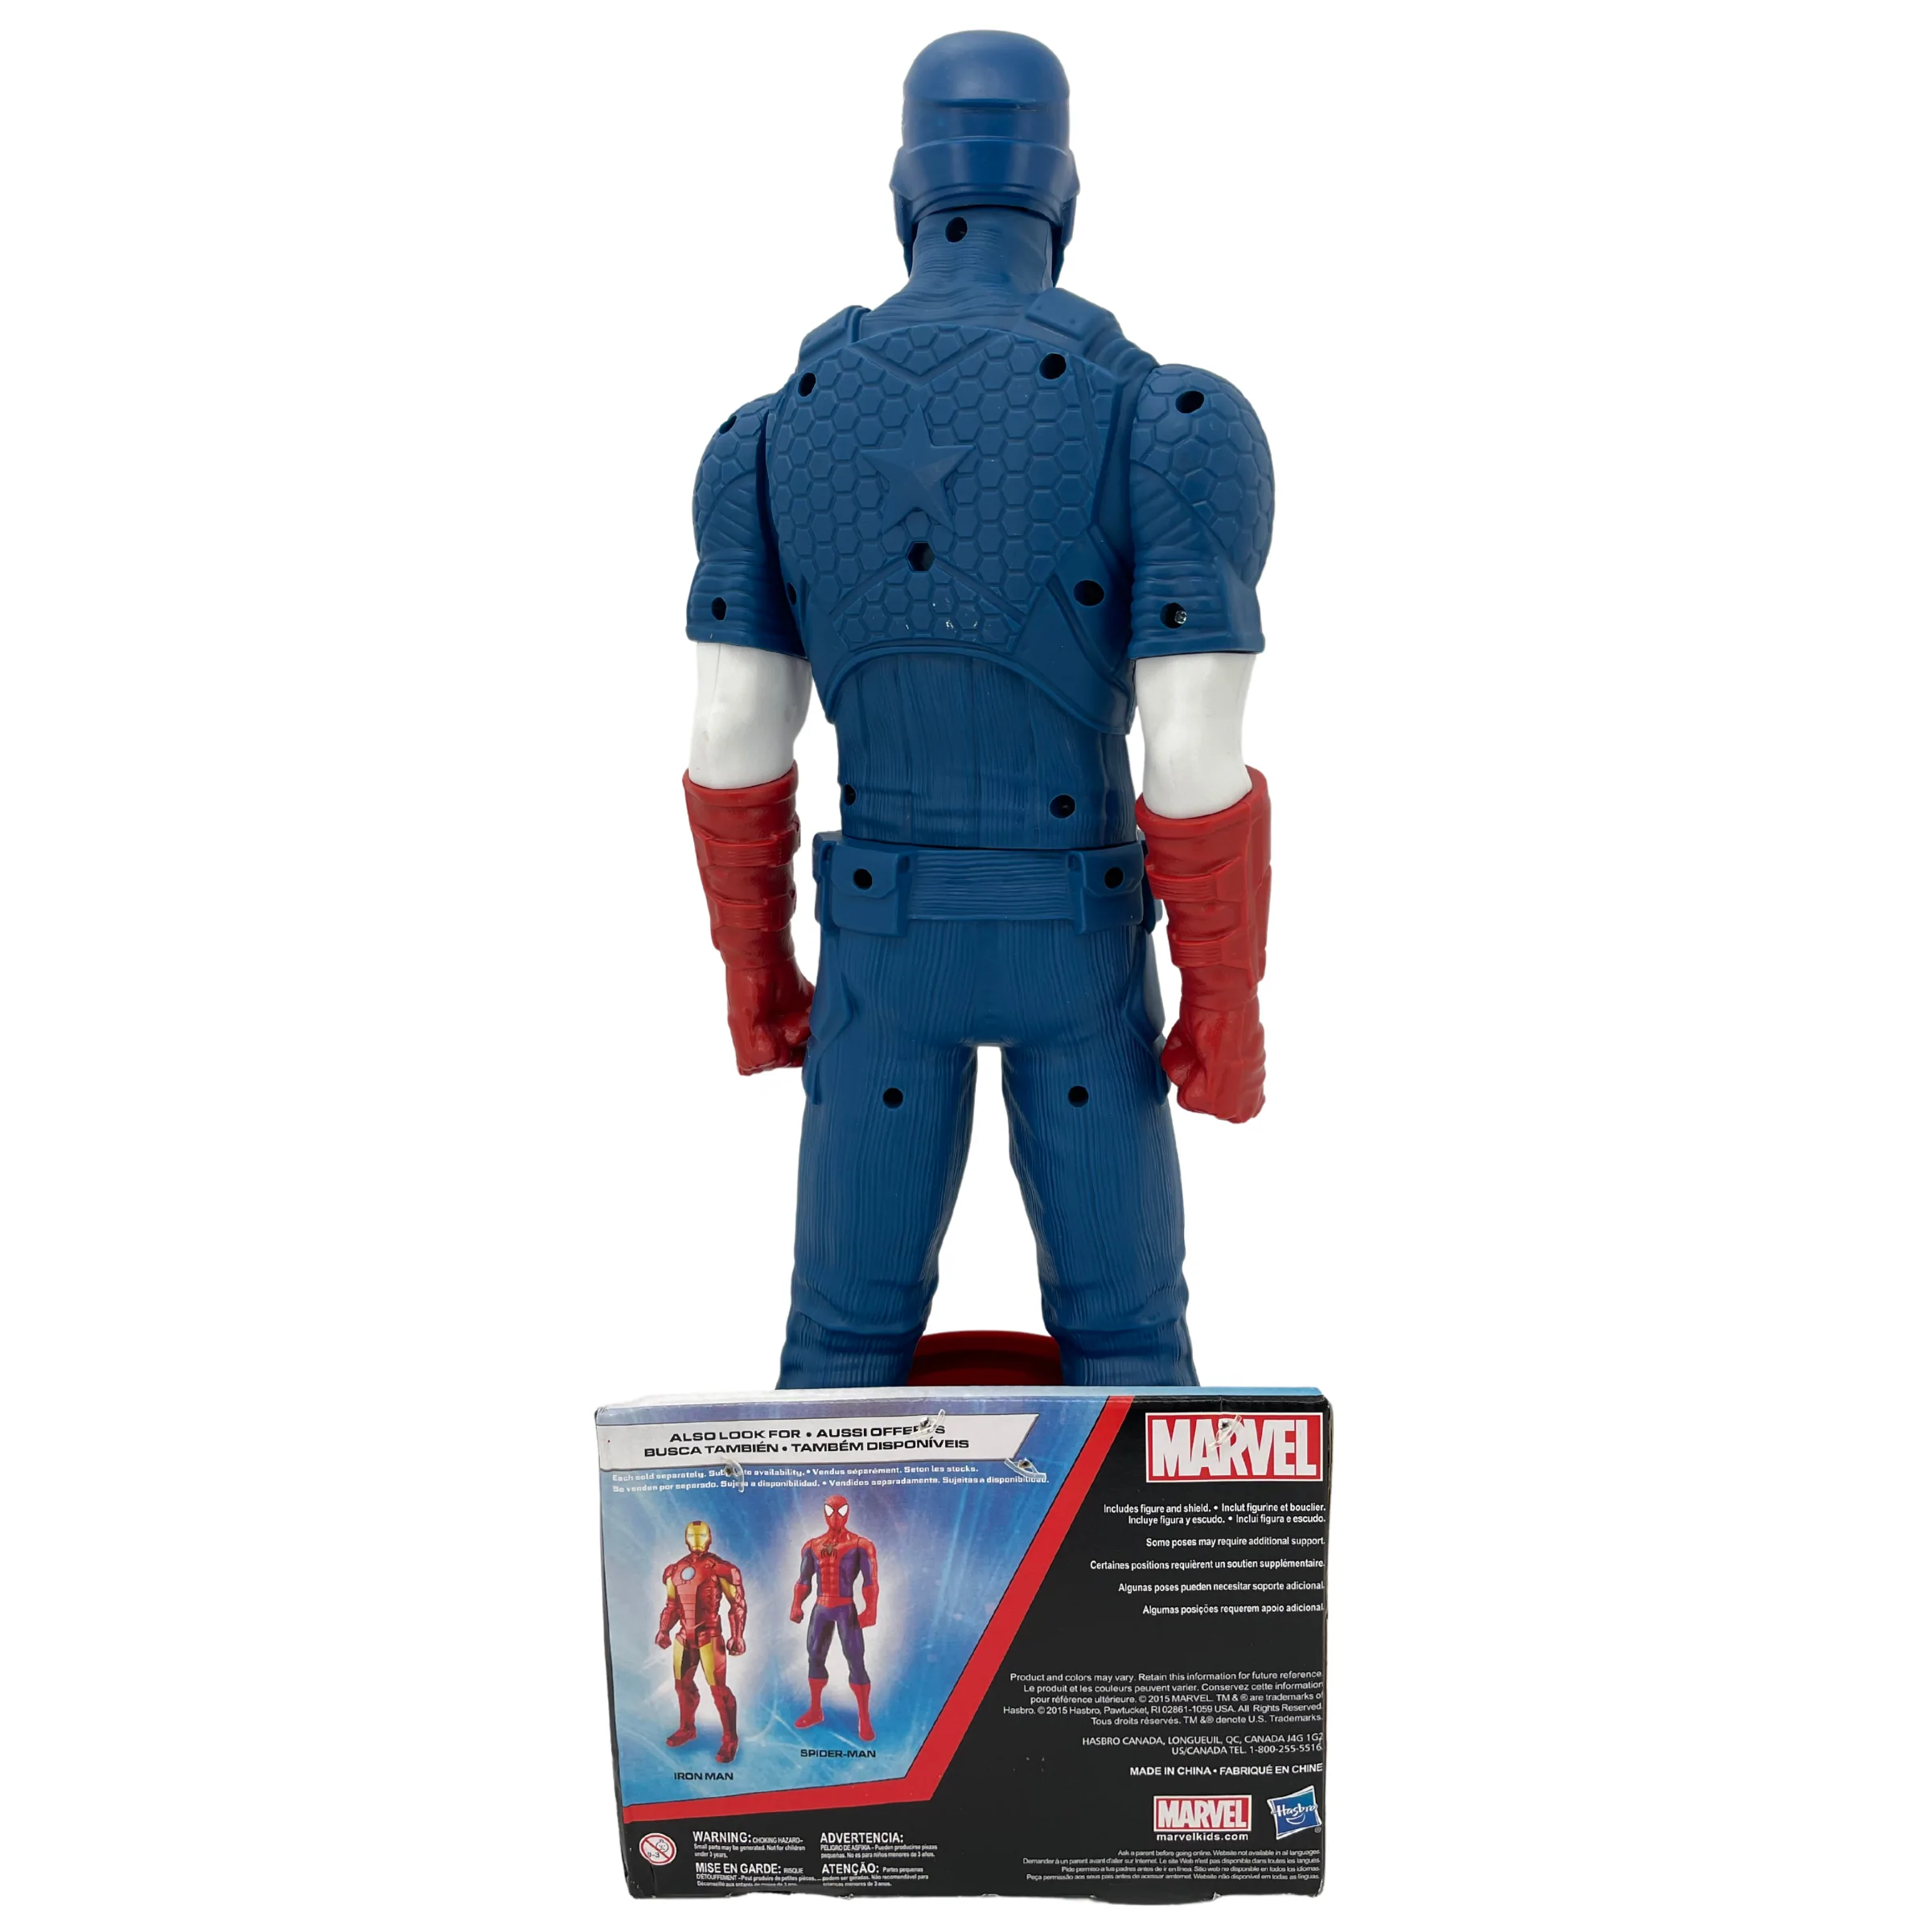 Marvel Captain America Action Figure / 20-inch Figure  **DEALS**